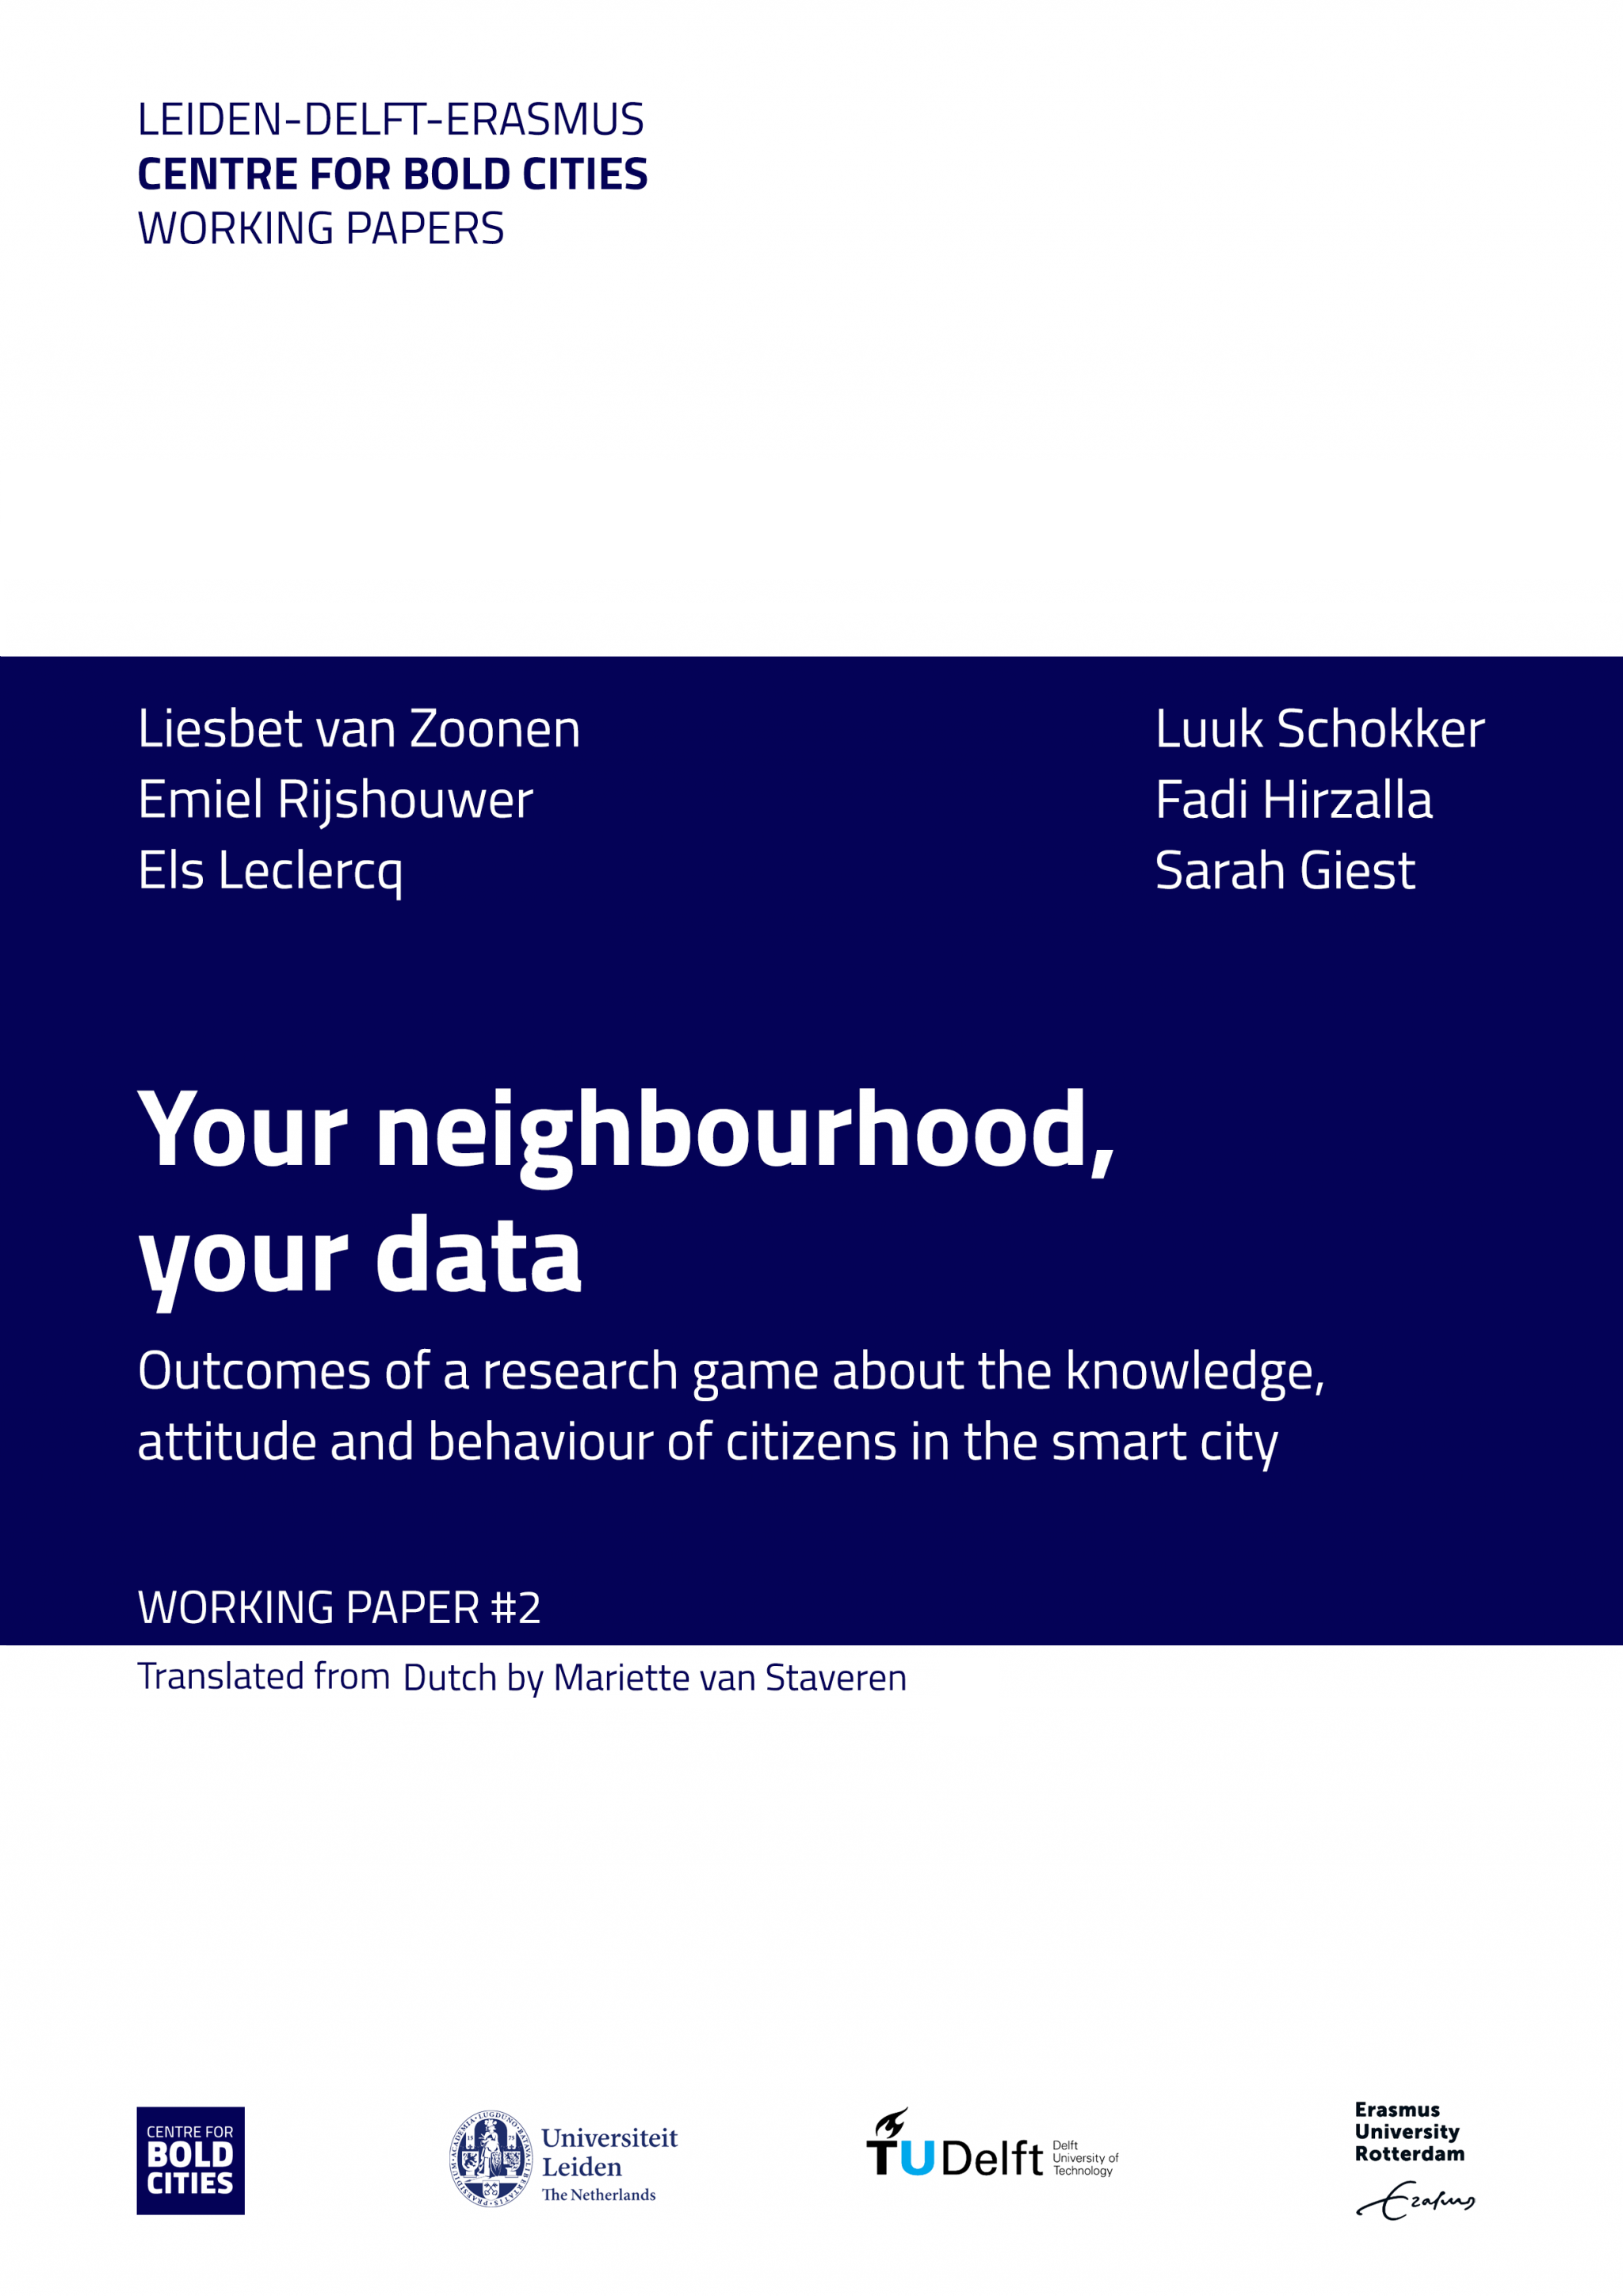 Working paper 2 - Your neighbourhood, your data